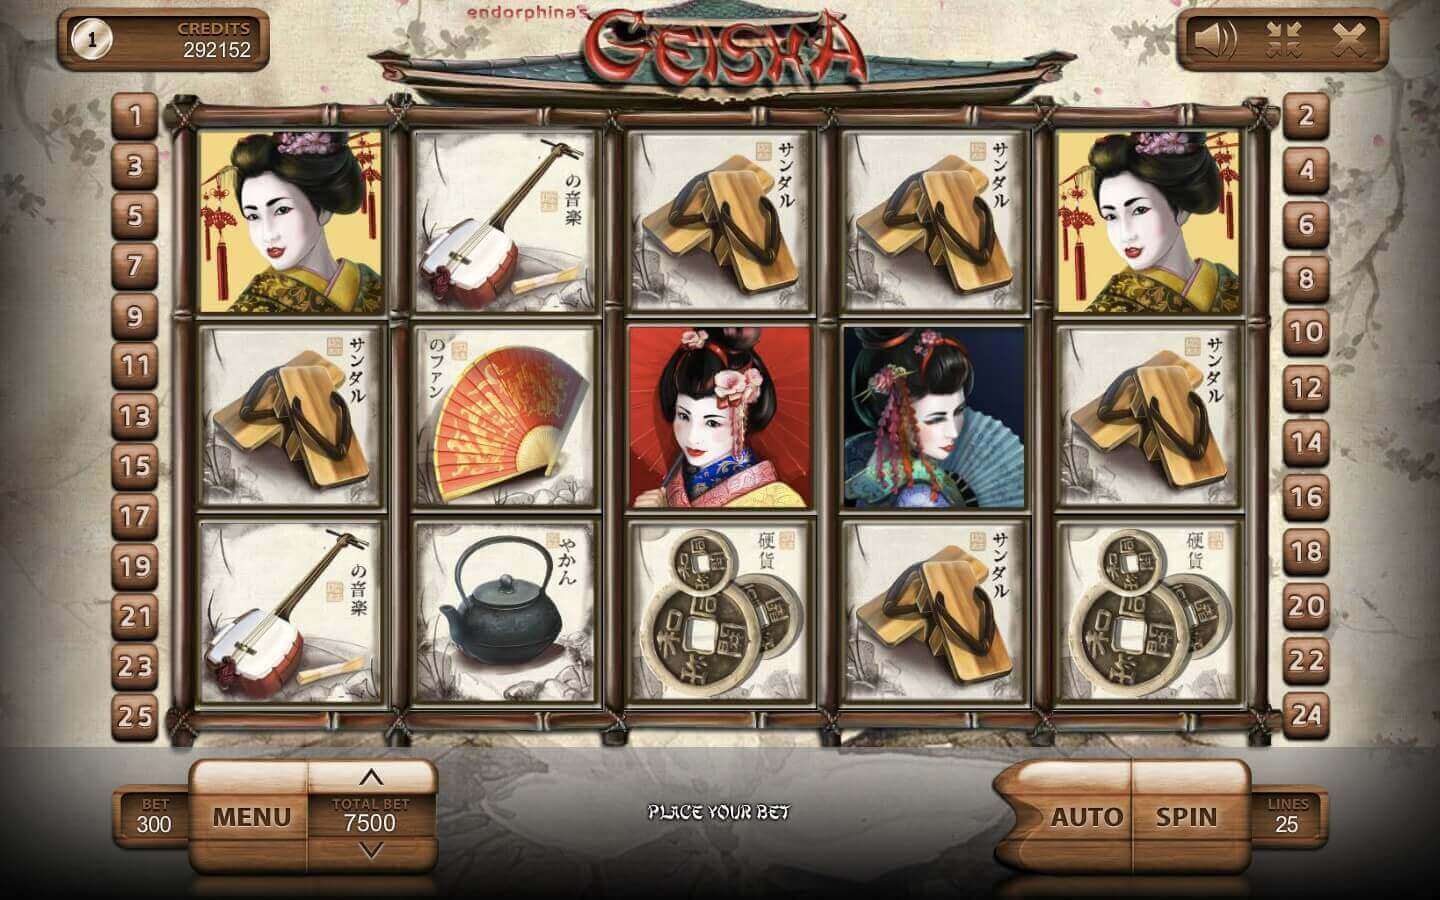 Geisha Spel proces